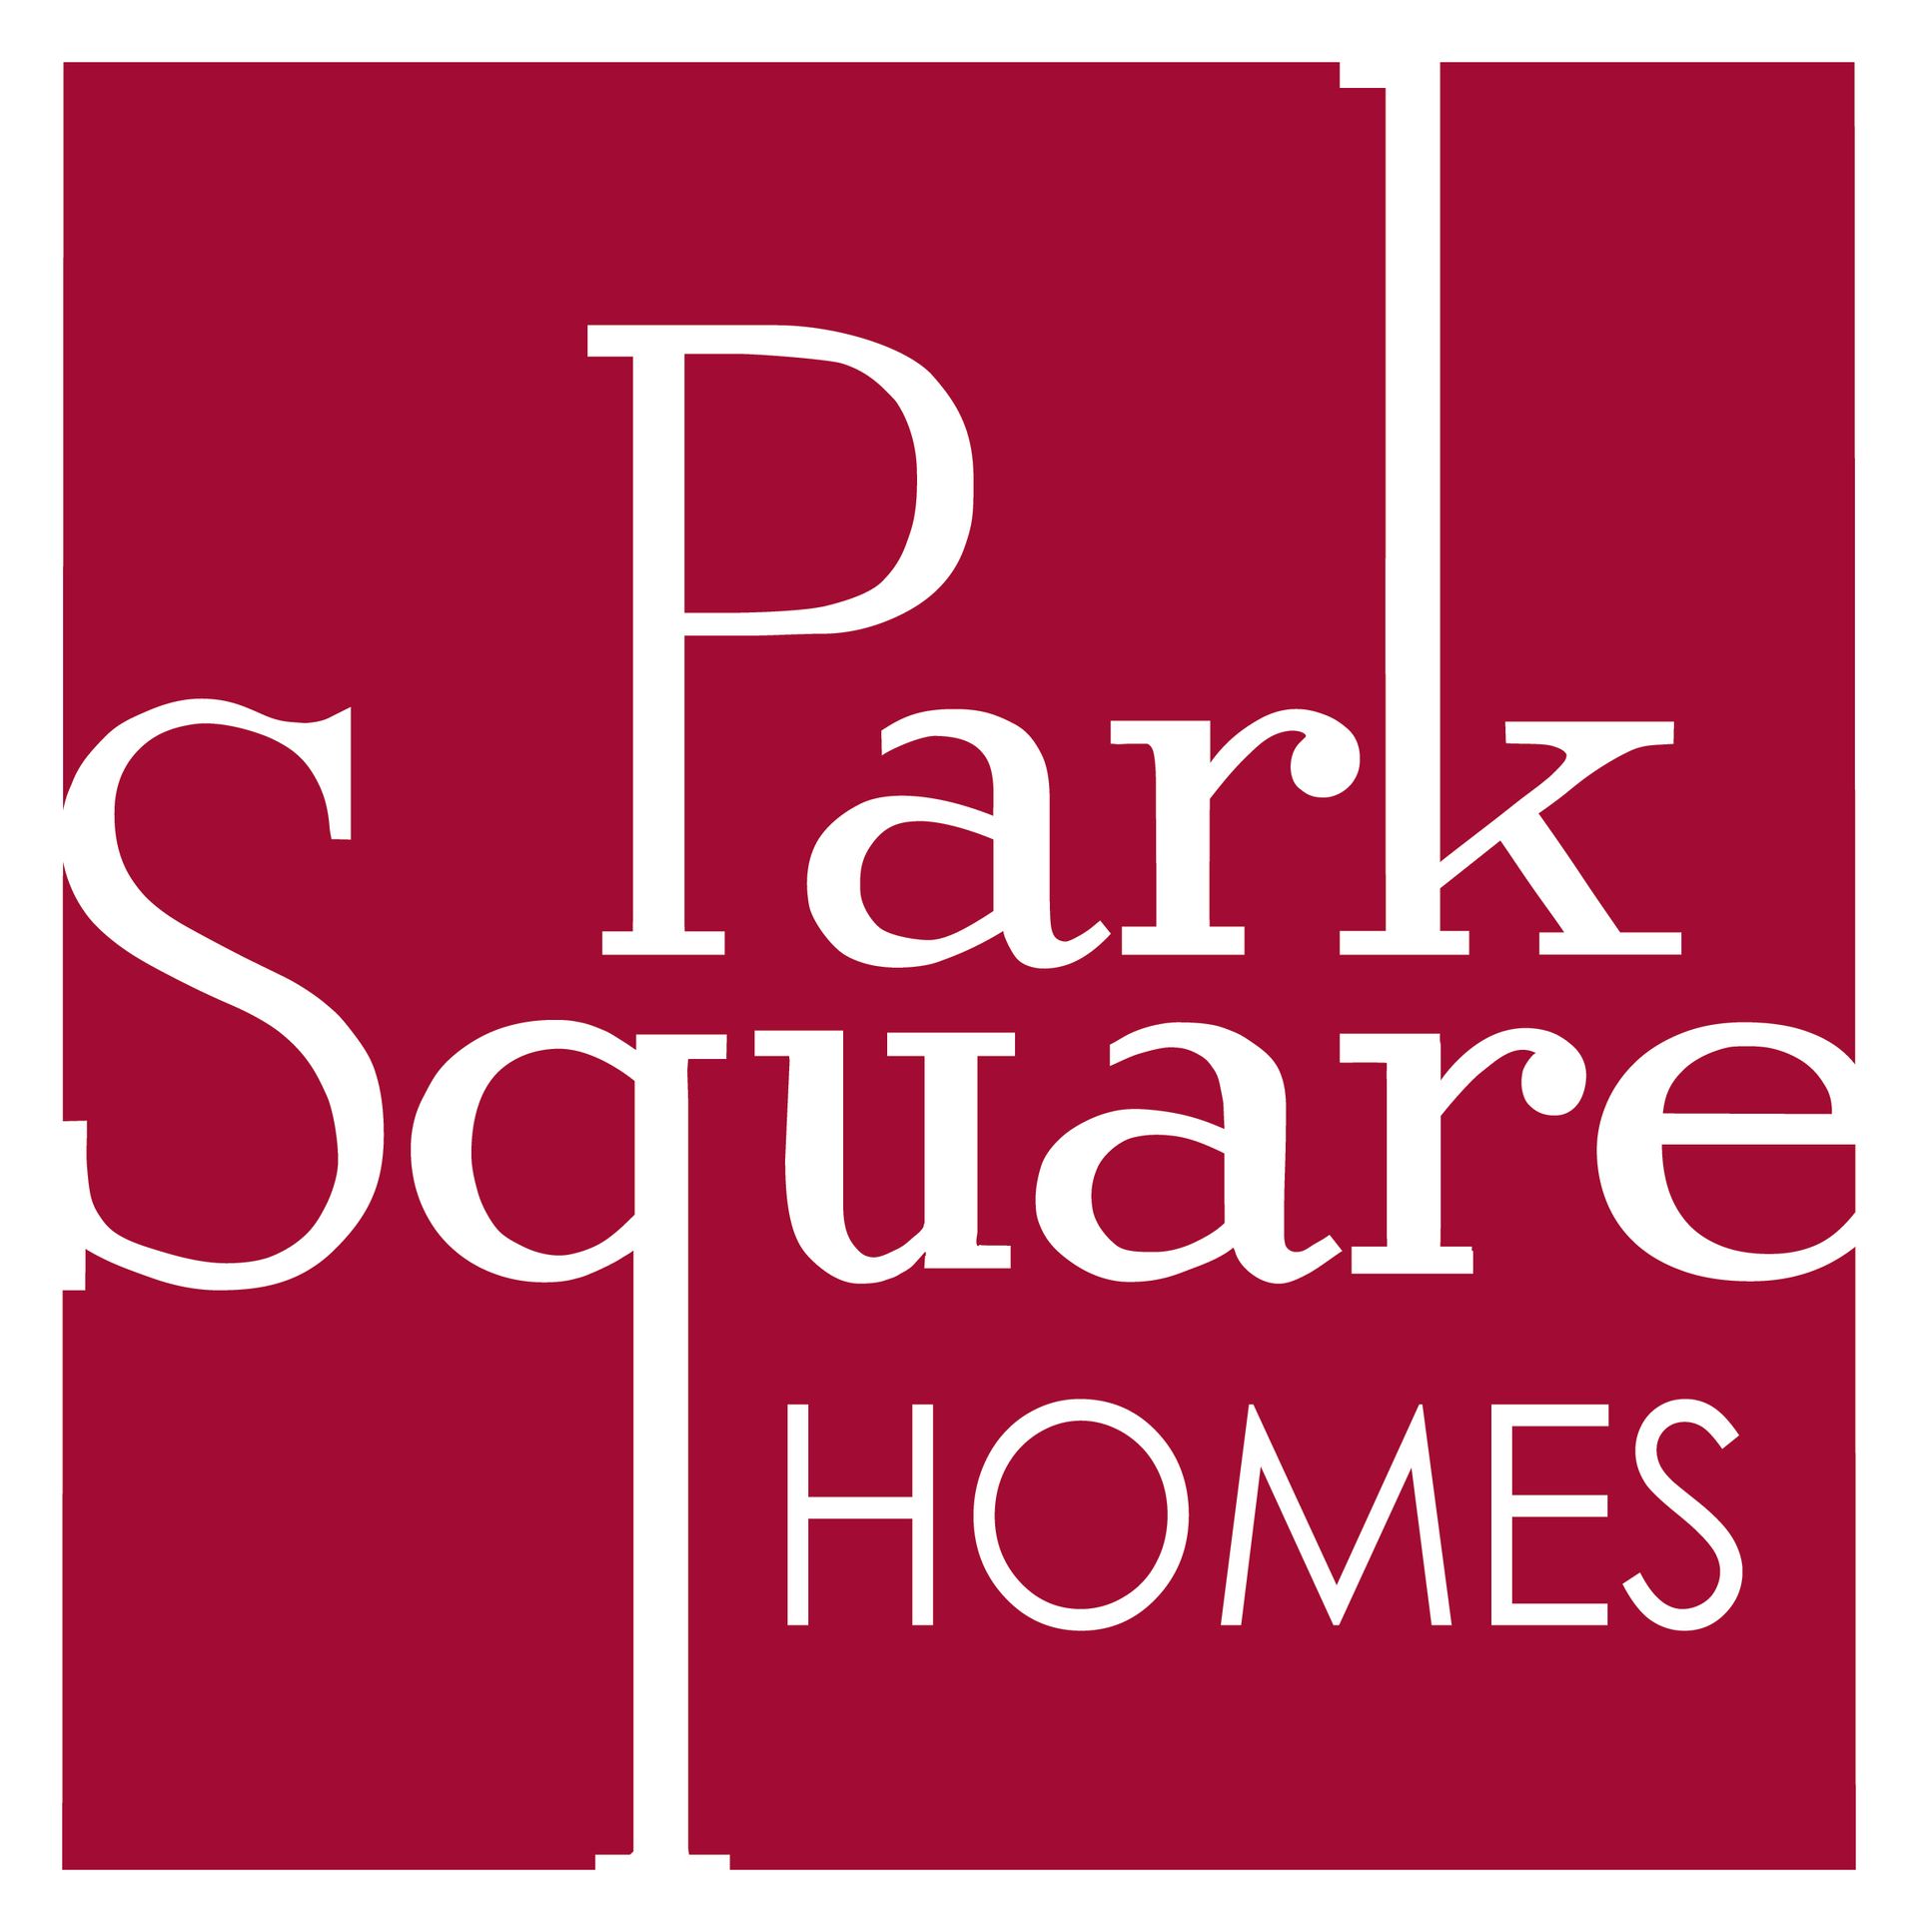 Park Square Homes